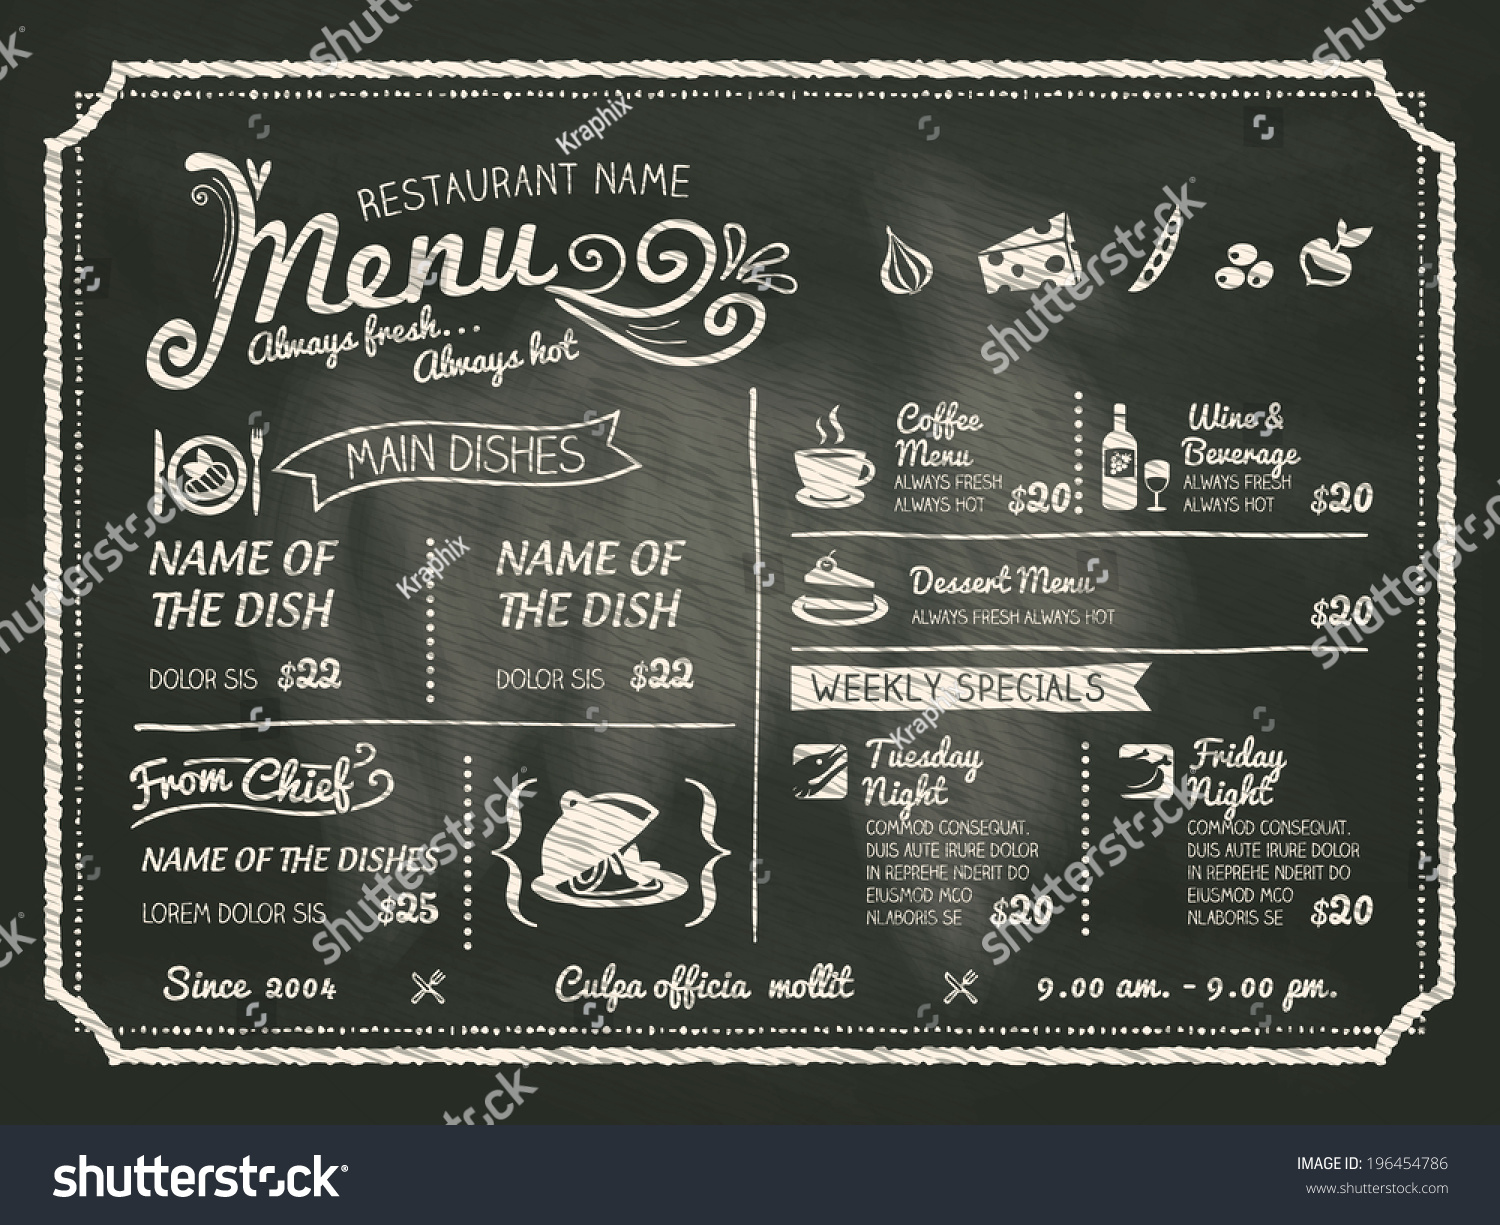 Restaurant Food Menu Design with Chalkboard Background #196454786